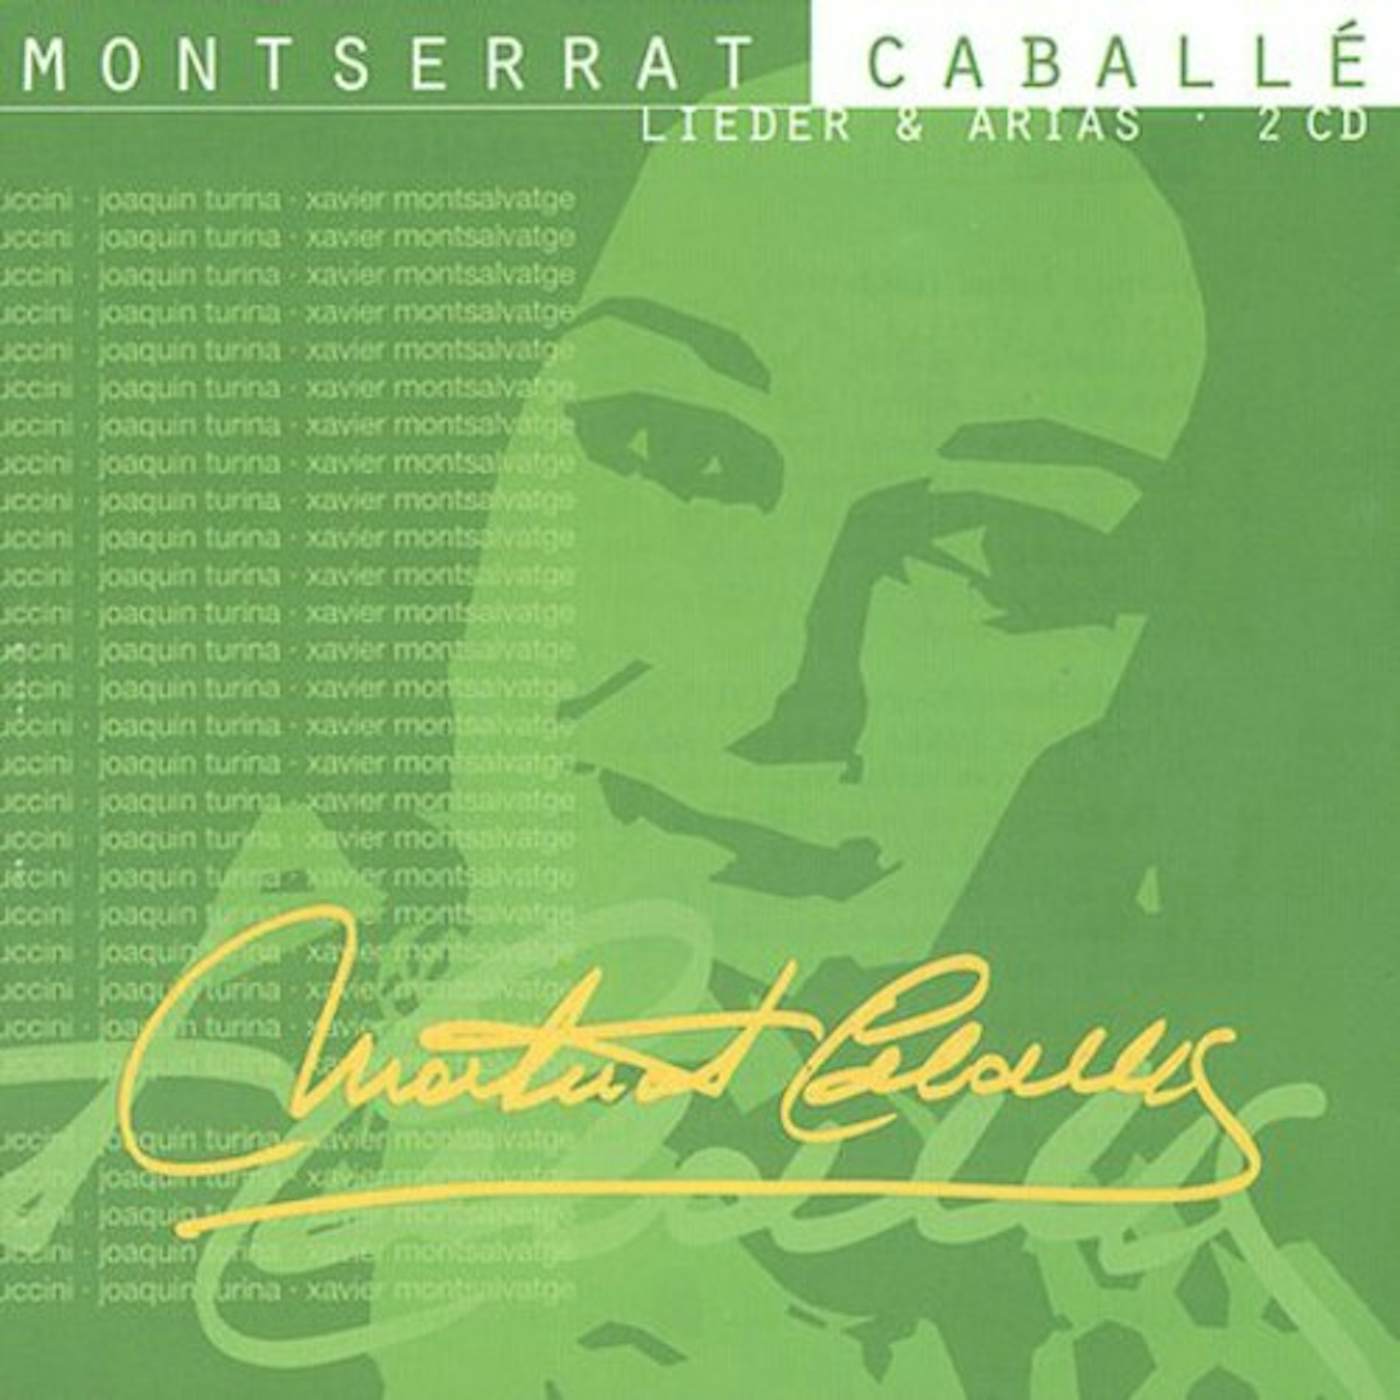 Montserrat Caballé LIEDER & ARIAS CD